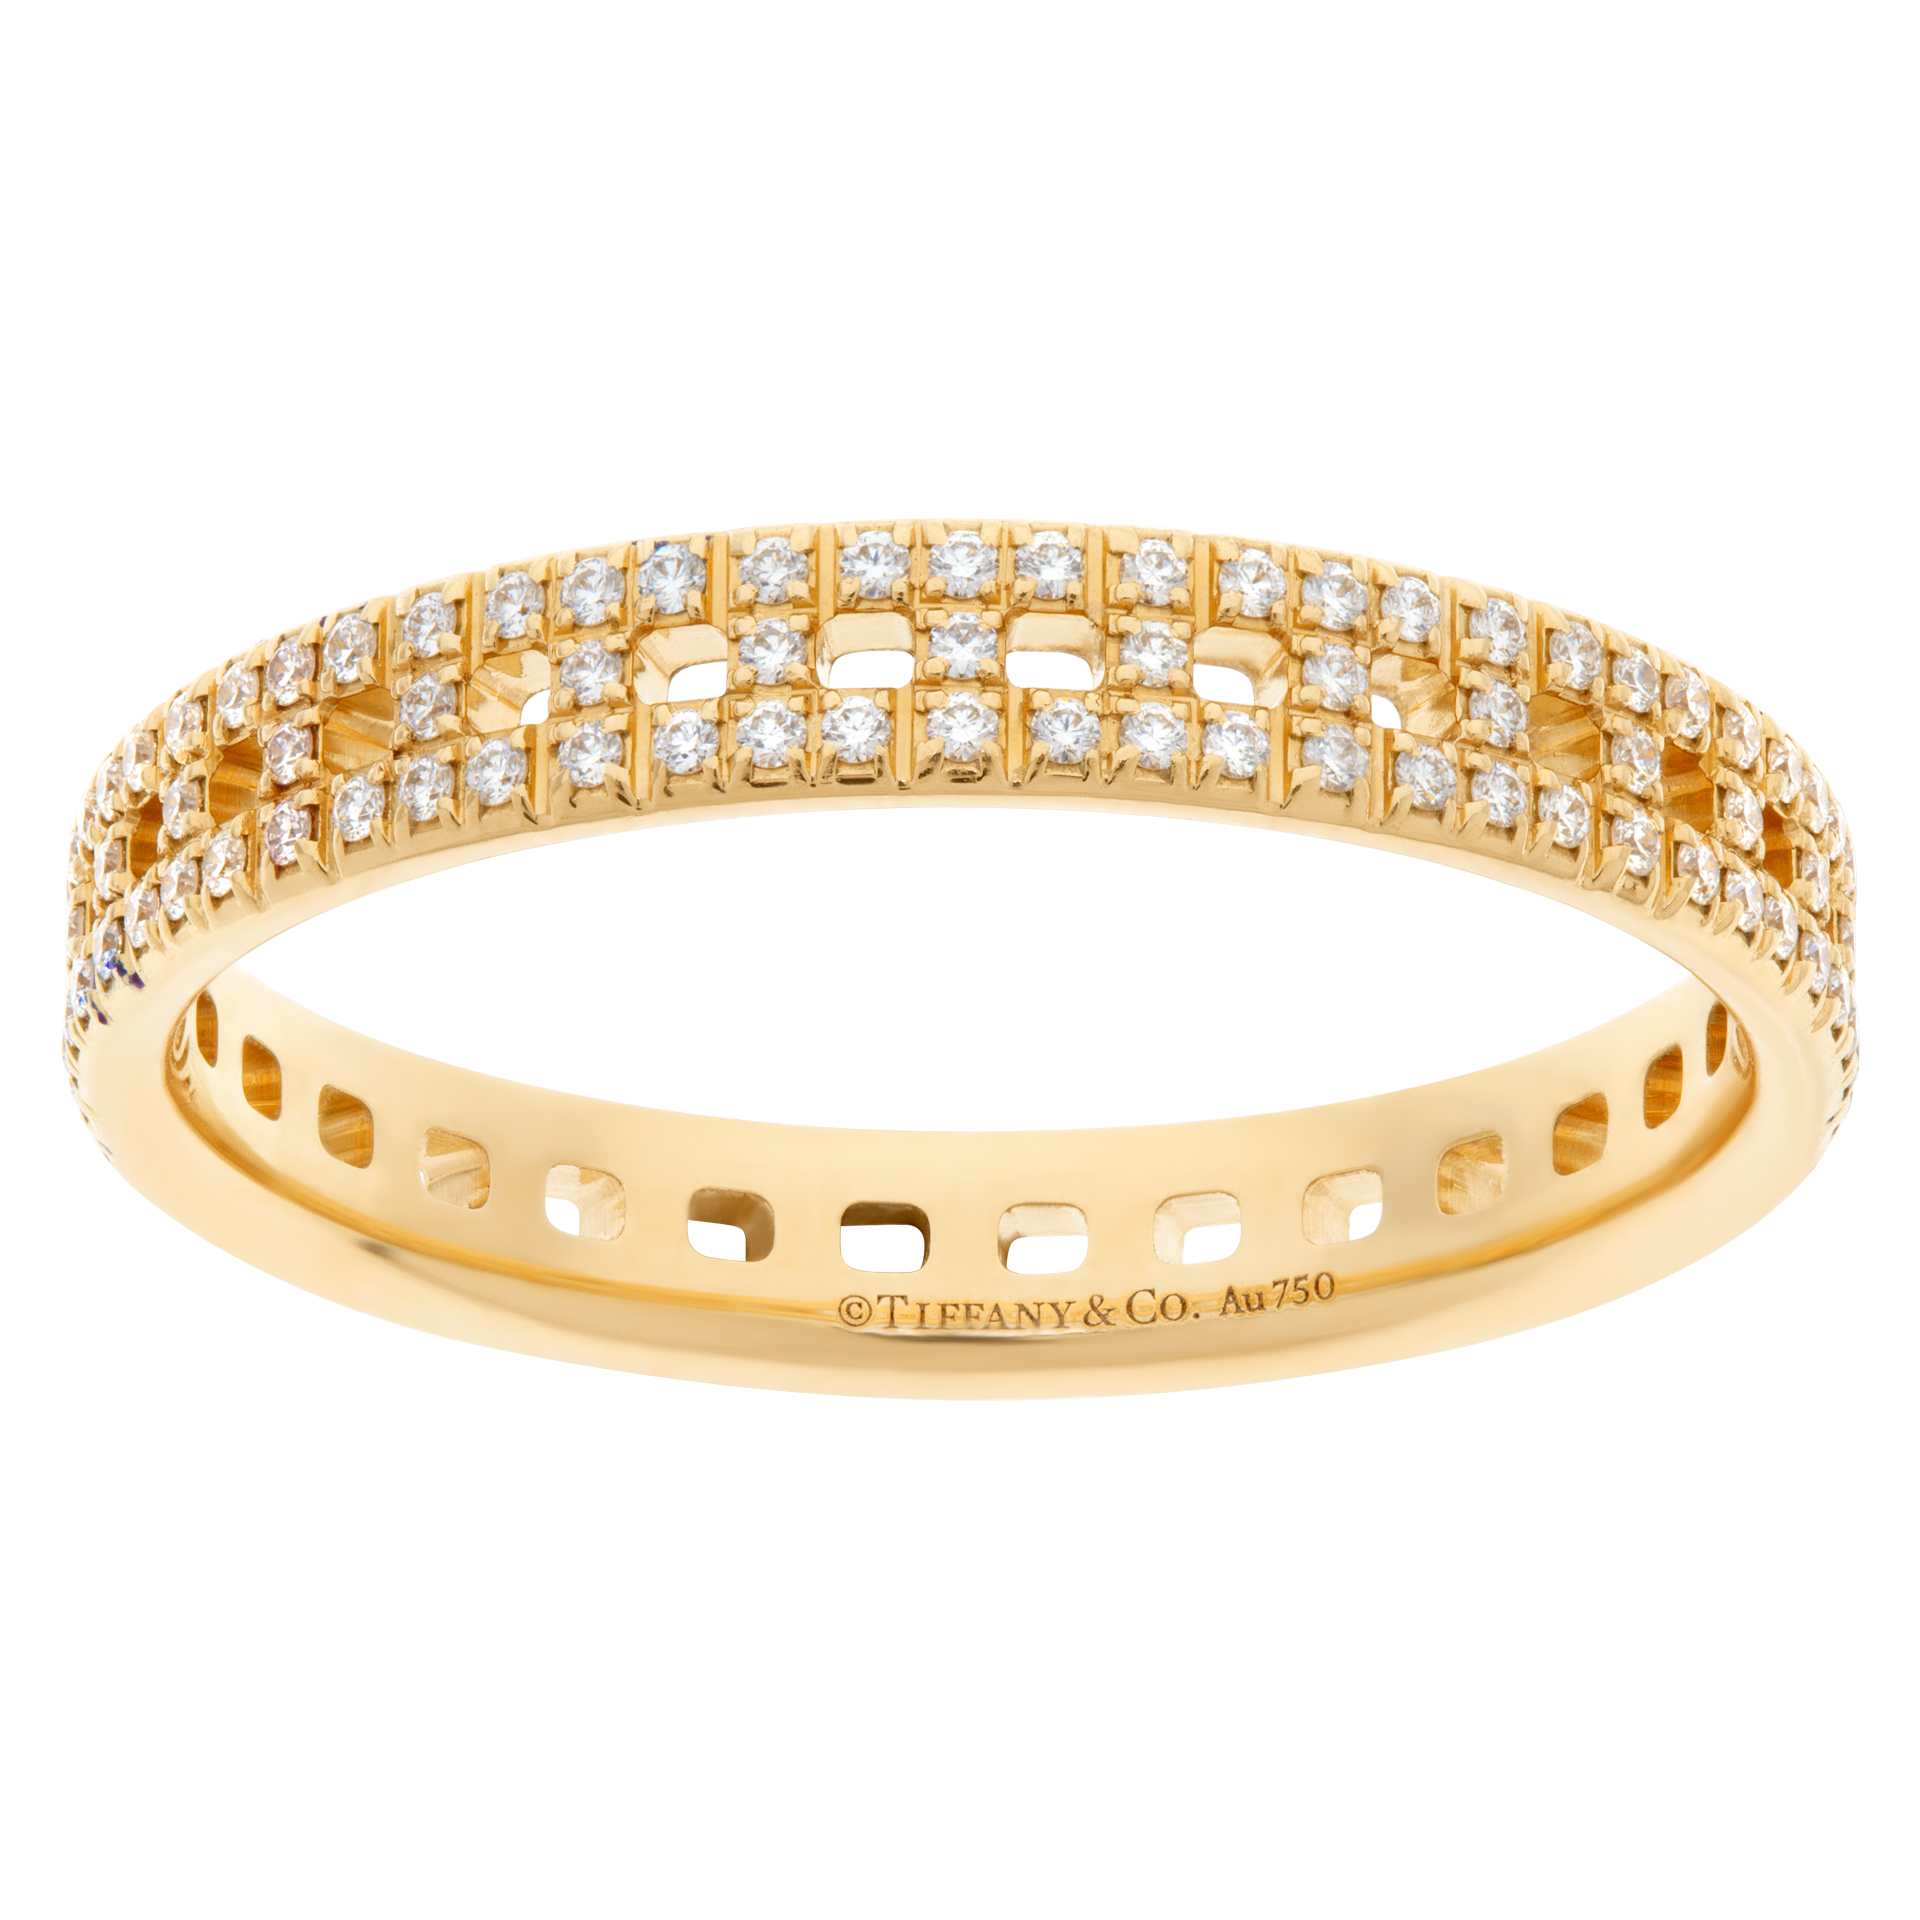 Tiffany & Co. True T Narrow ring 18k rose gold with diamonds